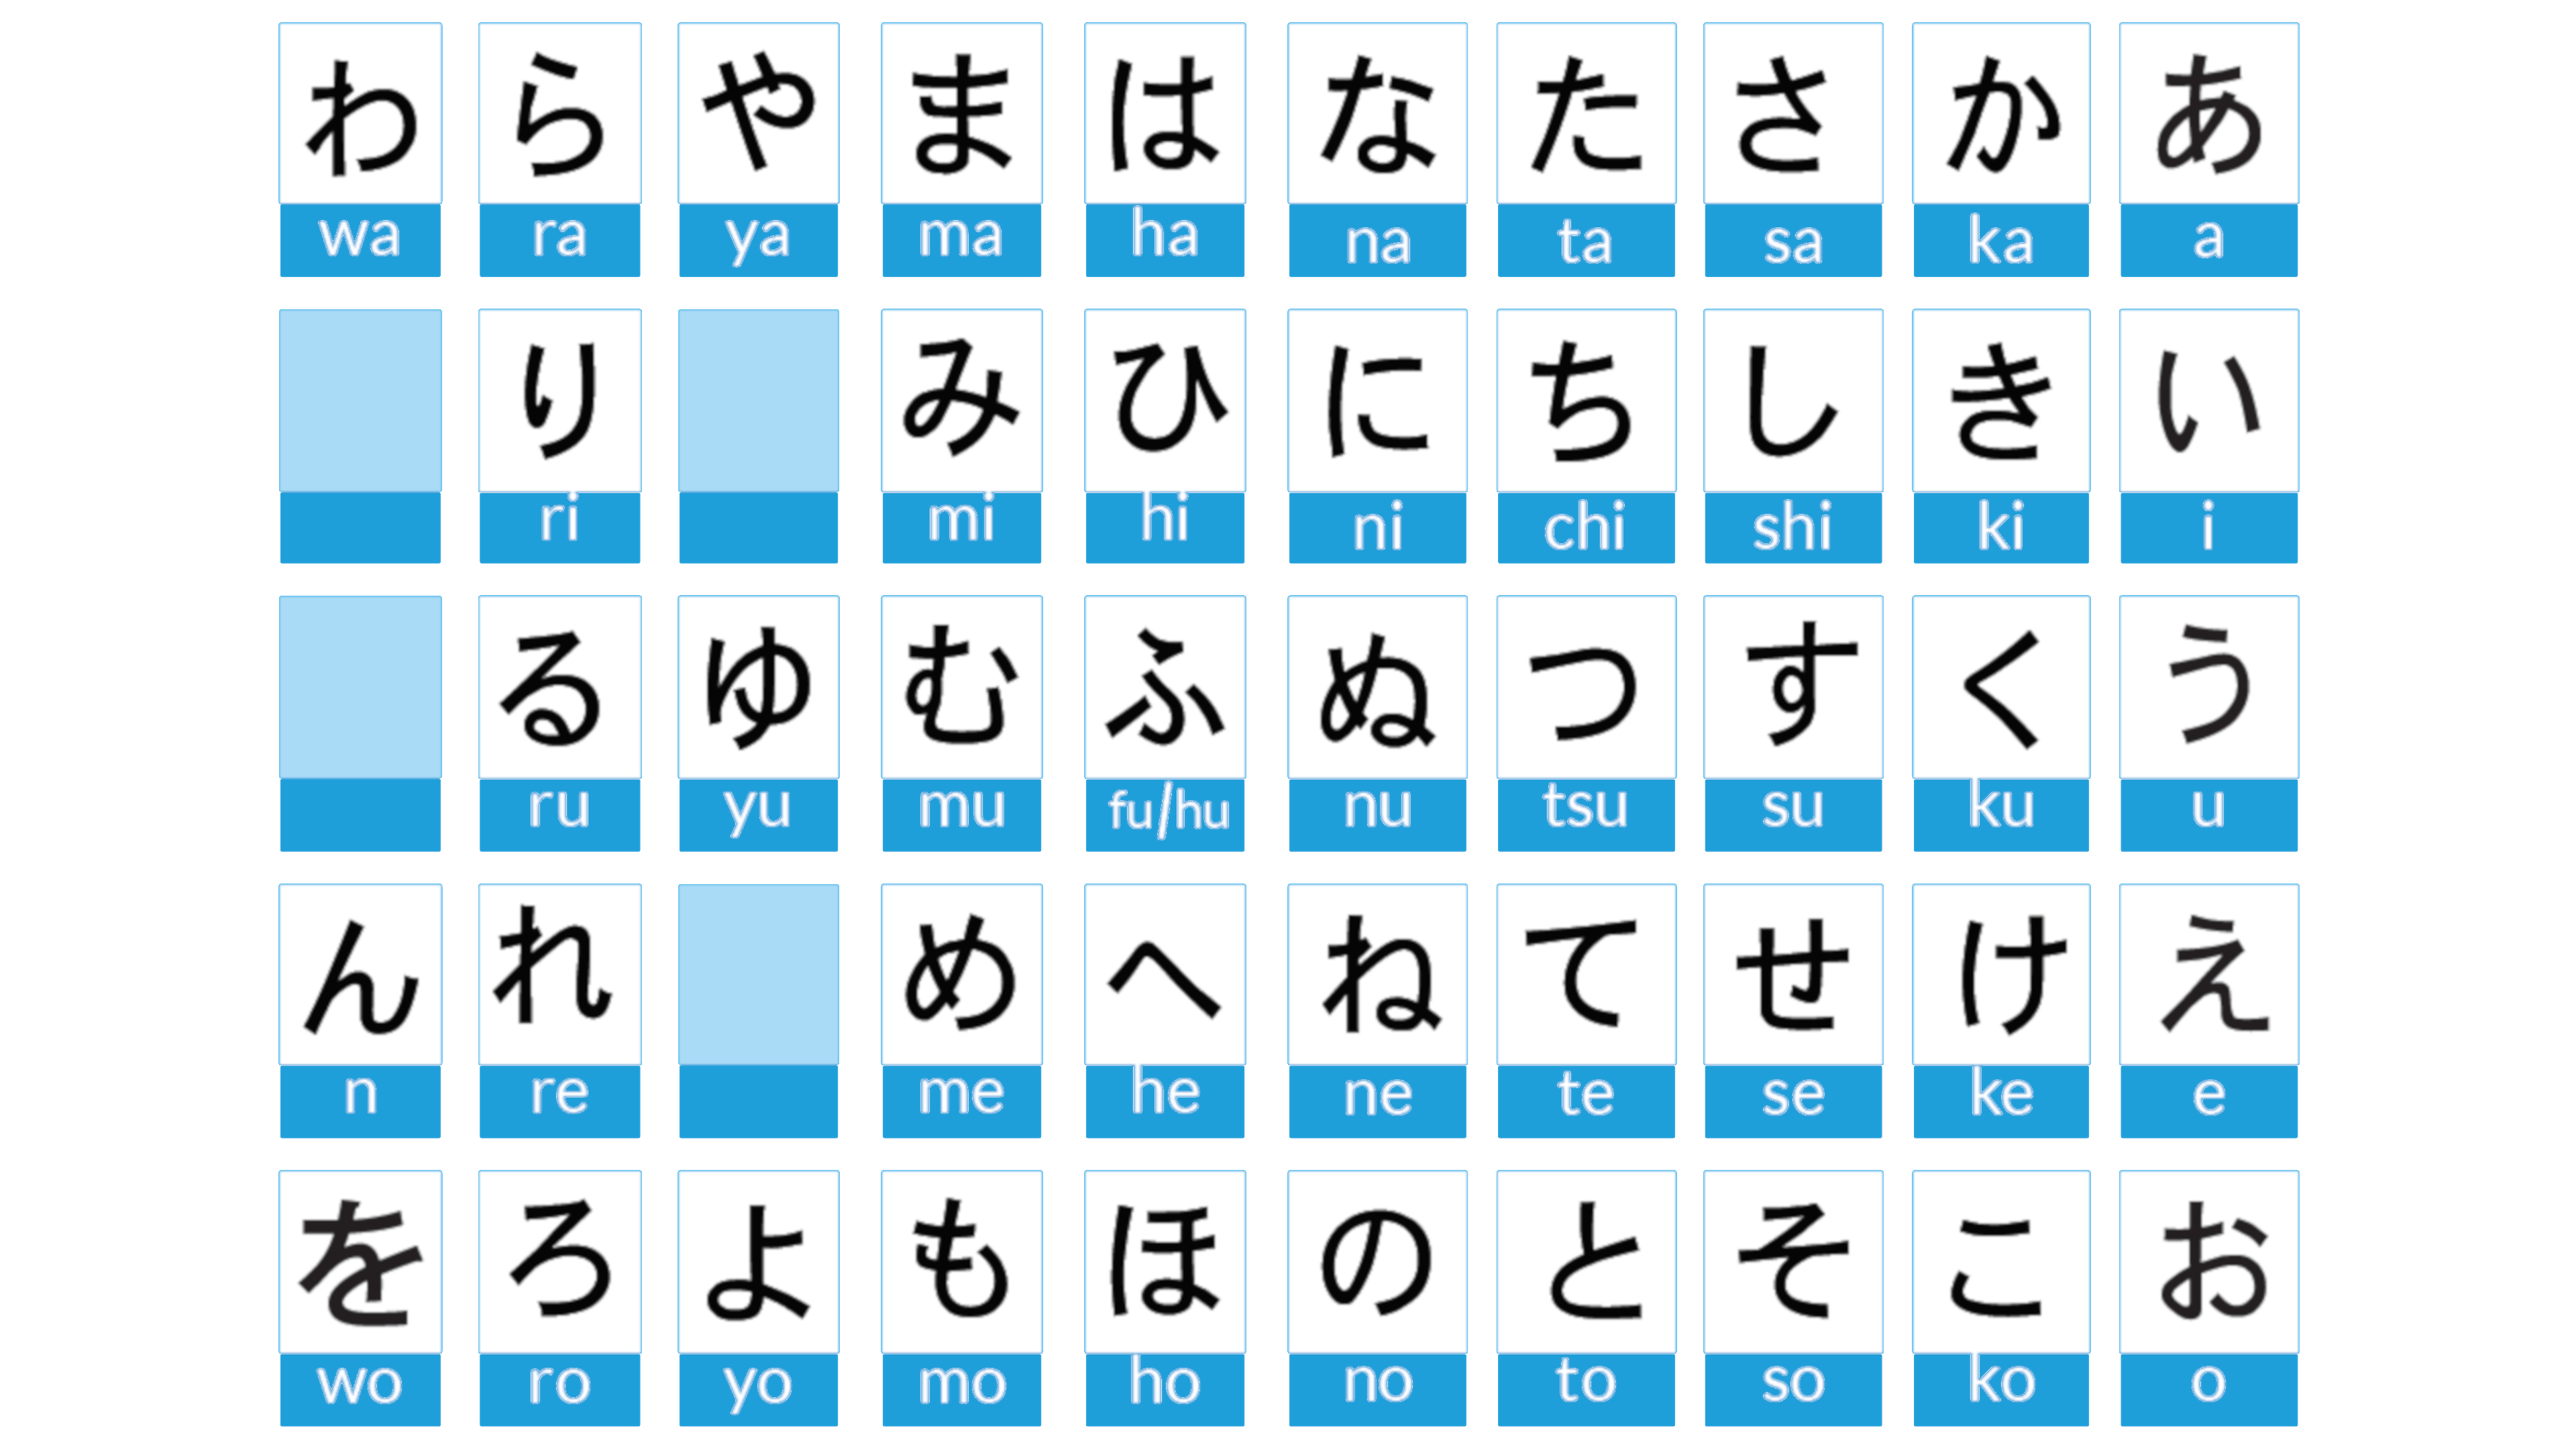 learn japanese japanesepod101 com learn japanese kanji learn japanese japan...